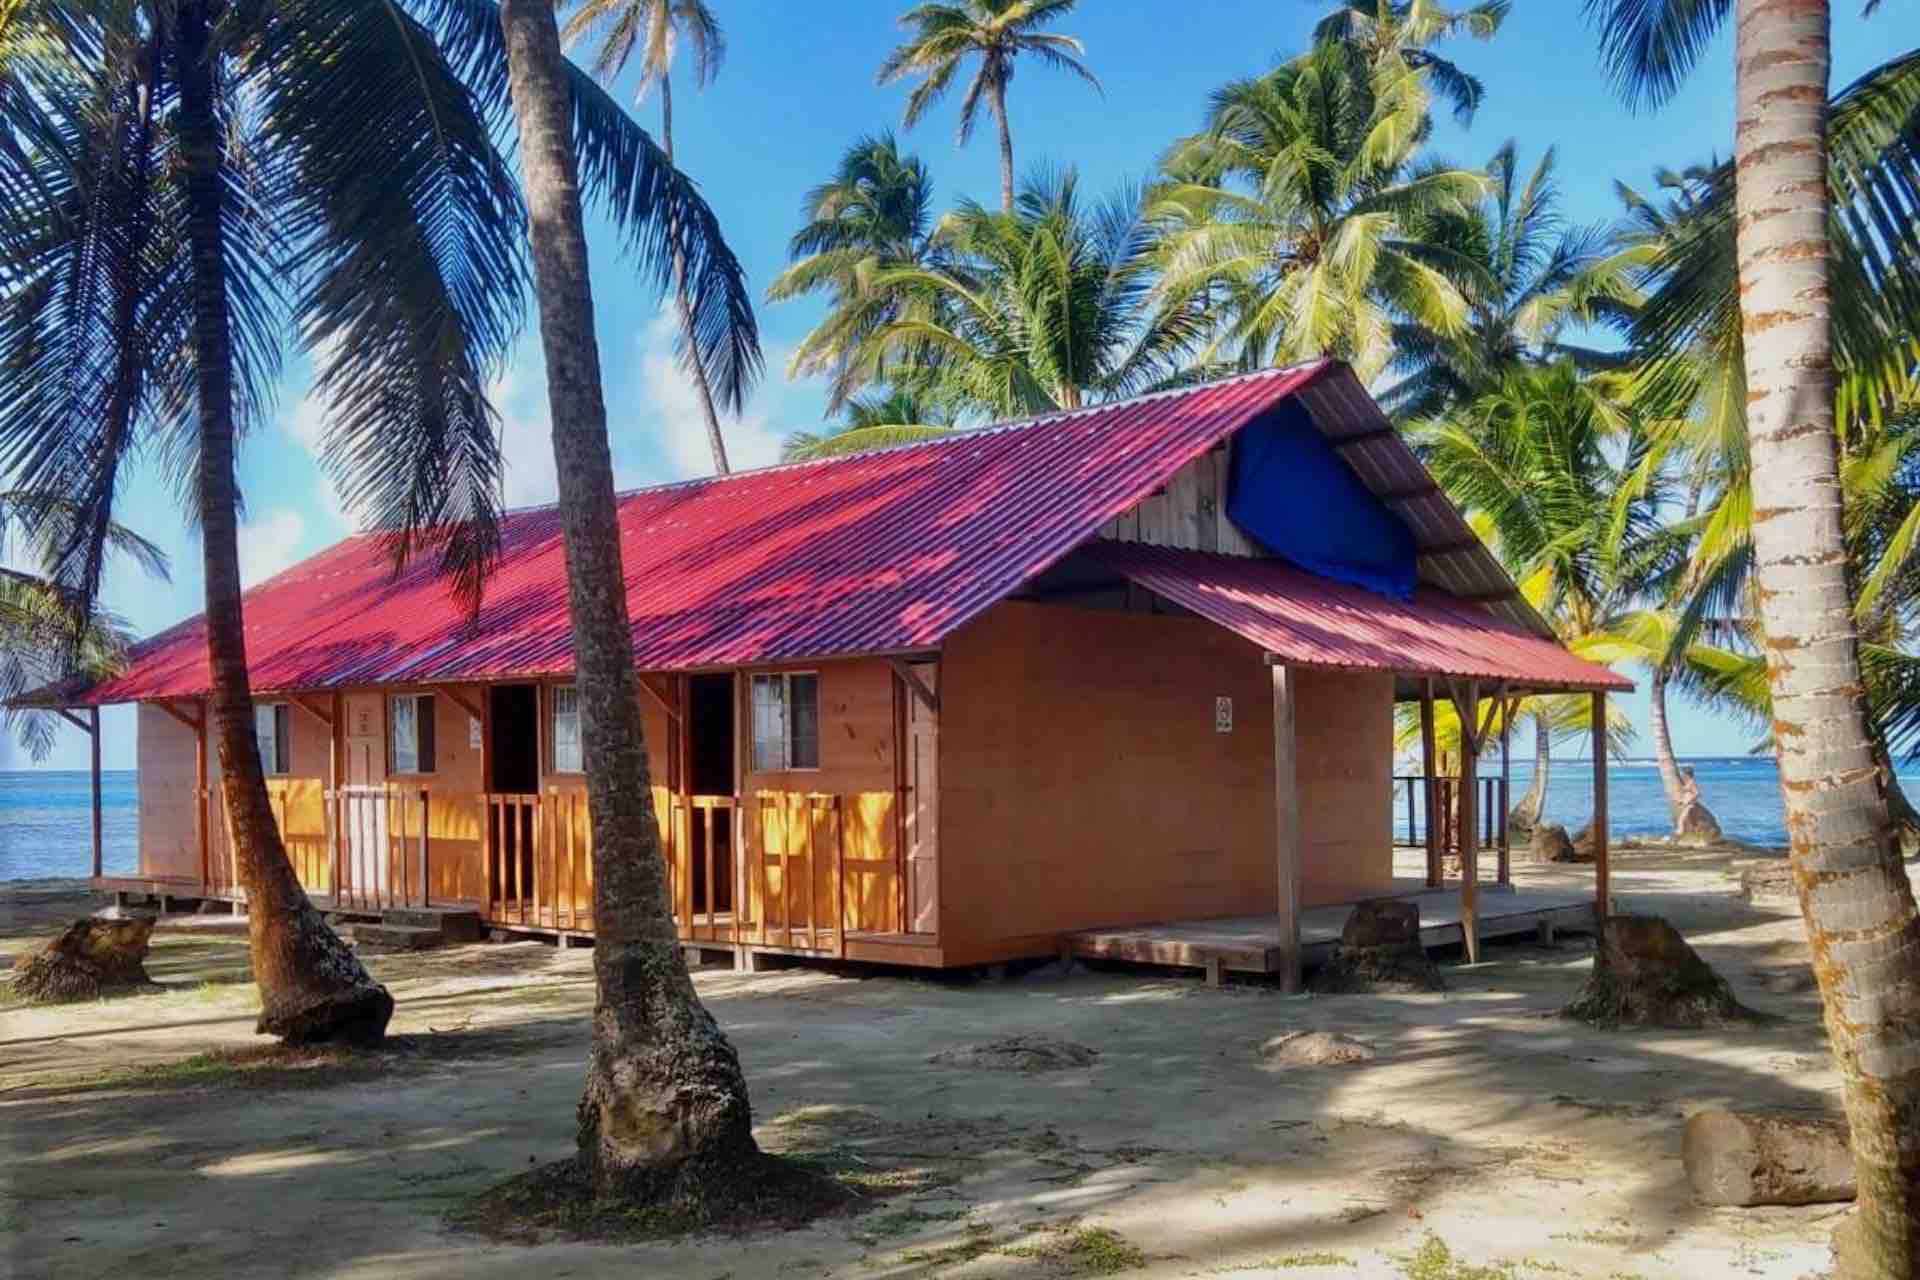 San Blas Isla Yansailadup island private rooms building palm trees beach